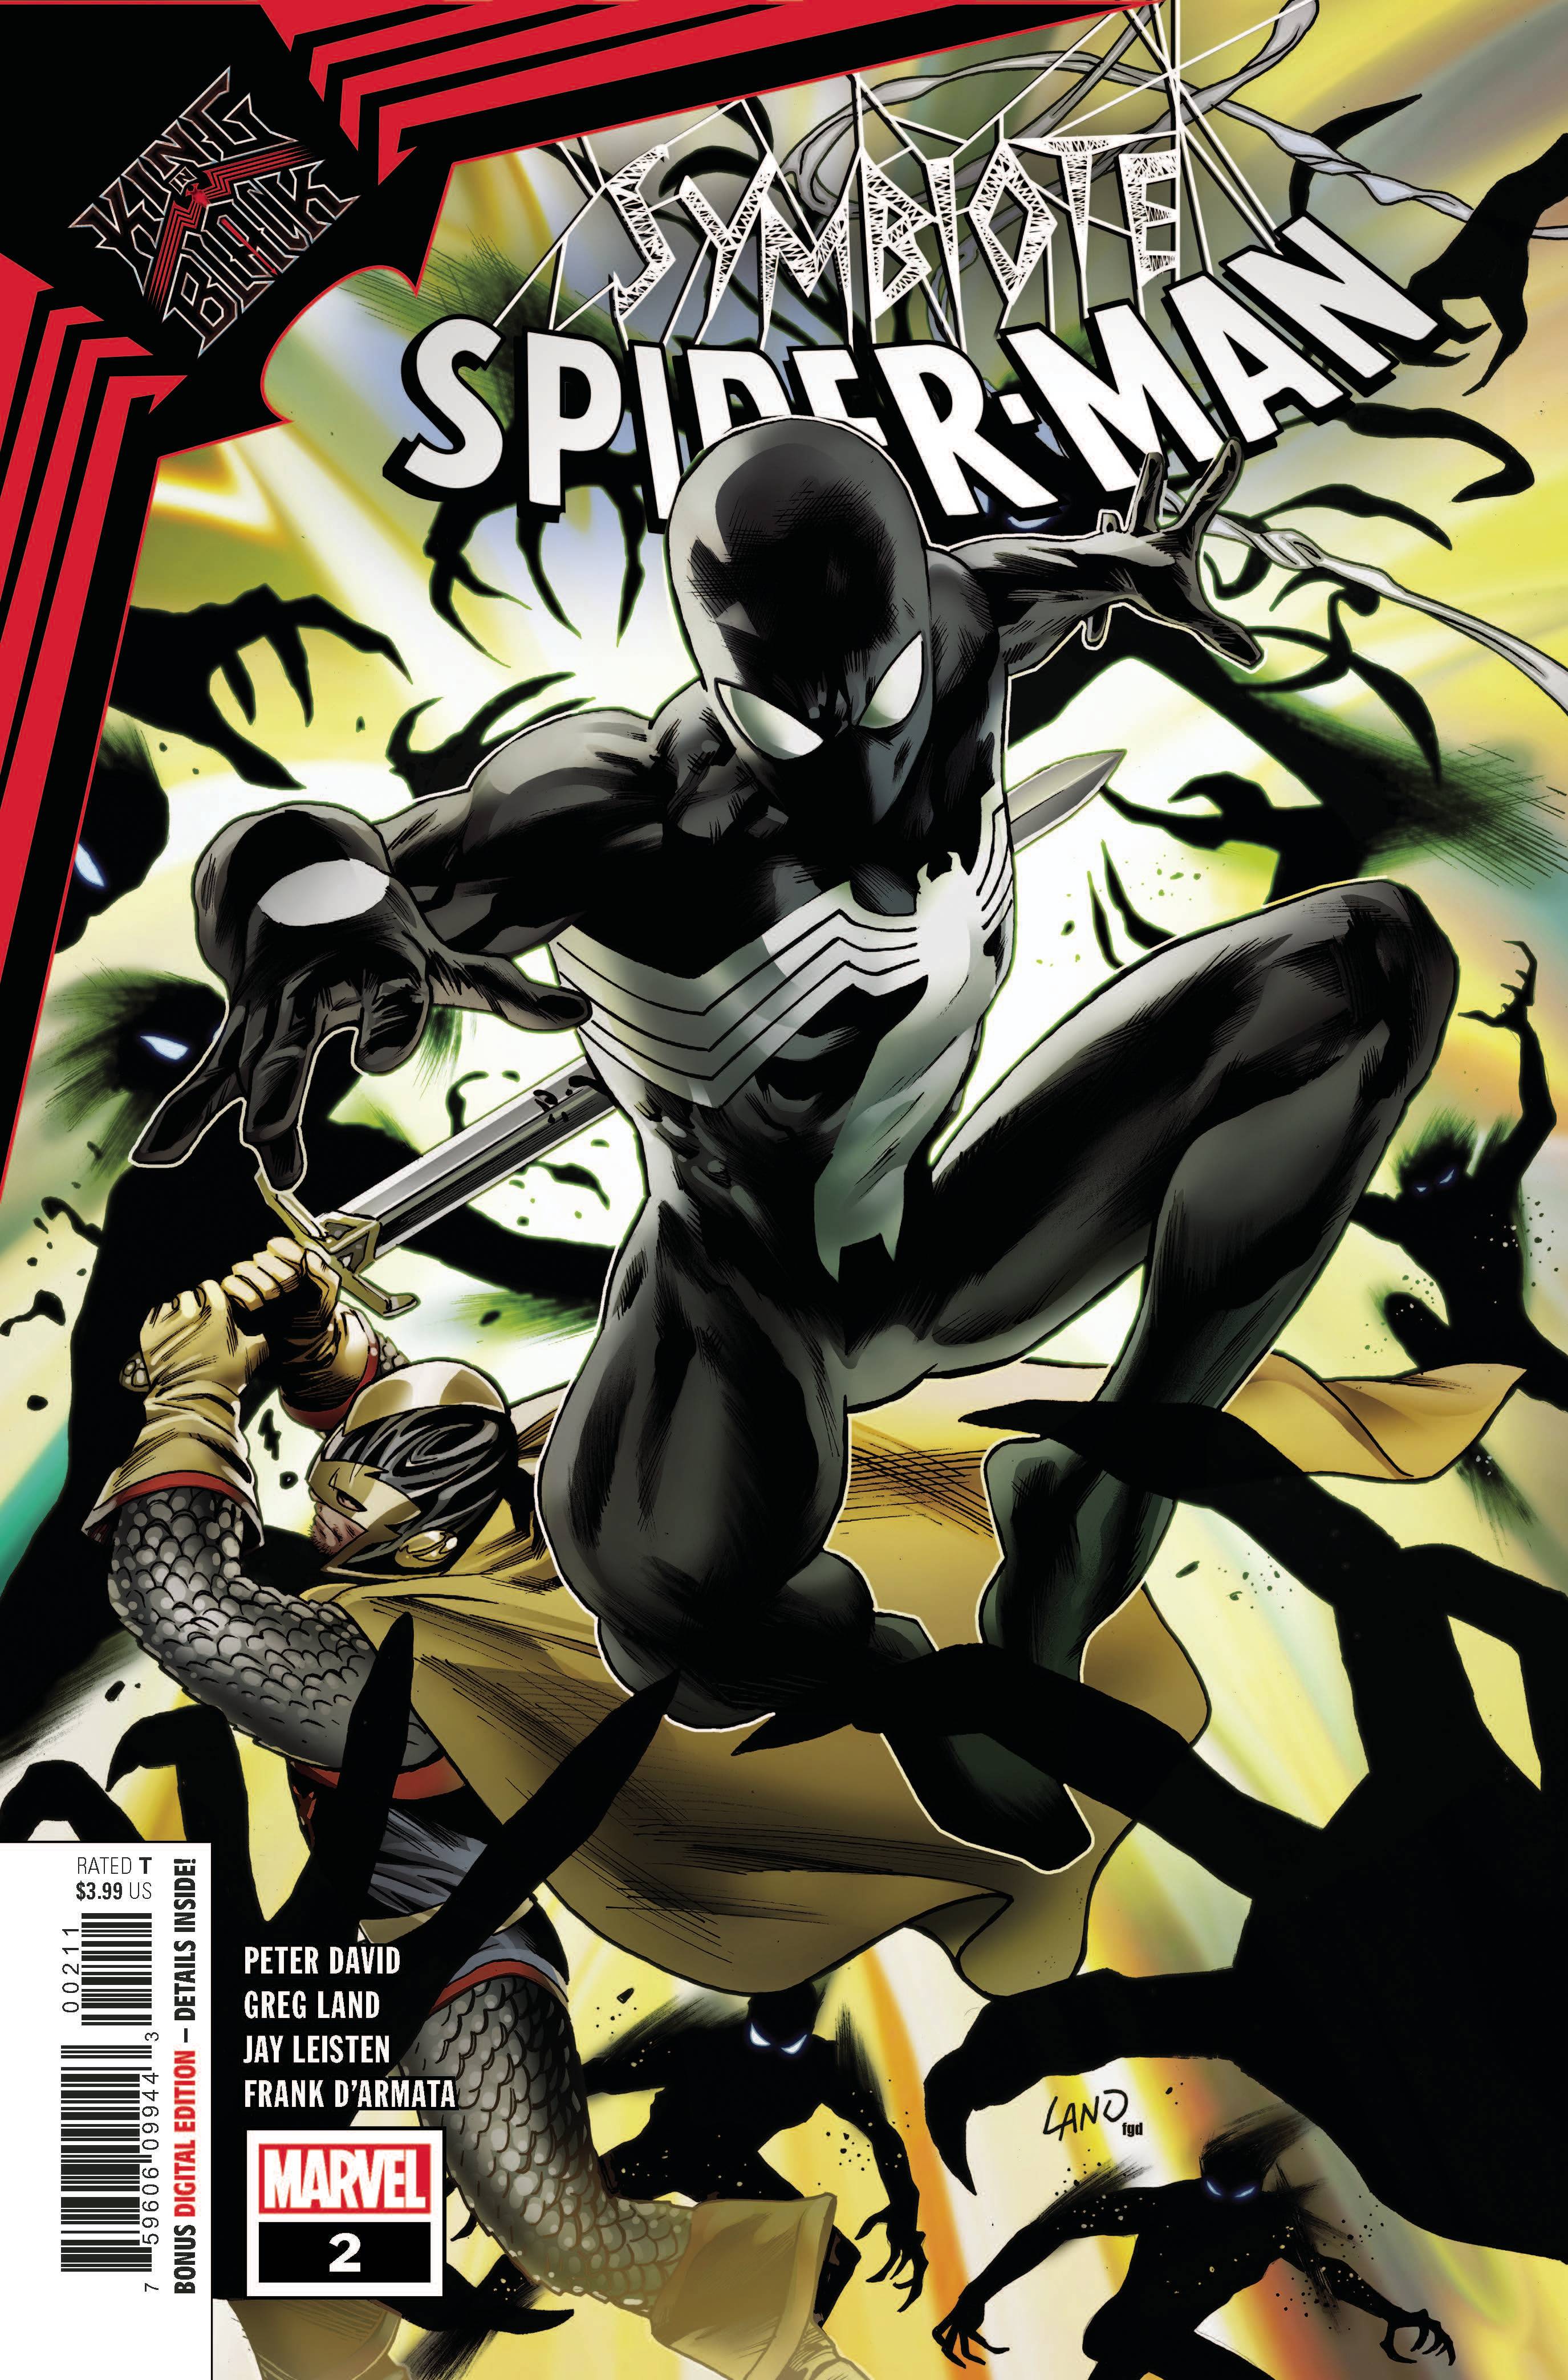 SYMBIOTE SPIDER-MAN KING IN BLACK #2 (OF 5)